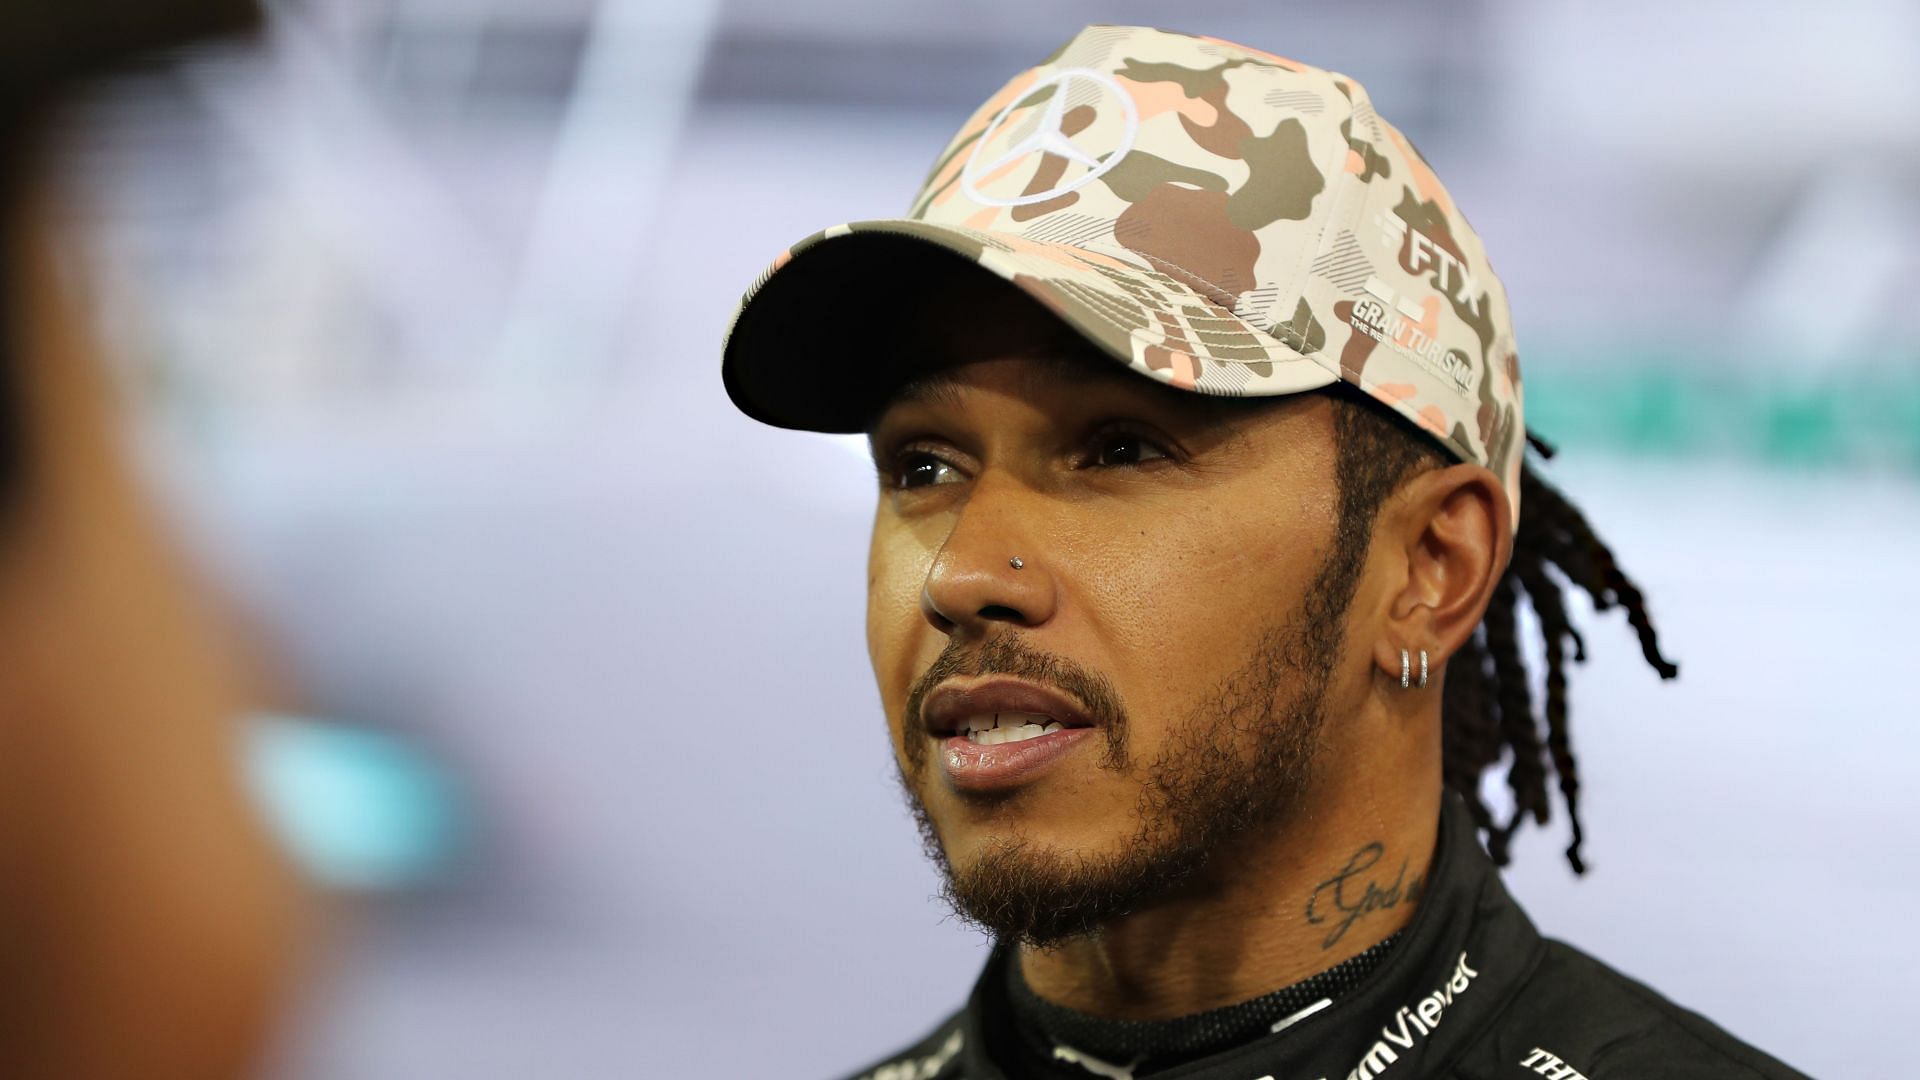 F1 Grand Prix of Abu Dhabi - Lewis Hamilton qualifies on the front row.